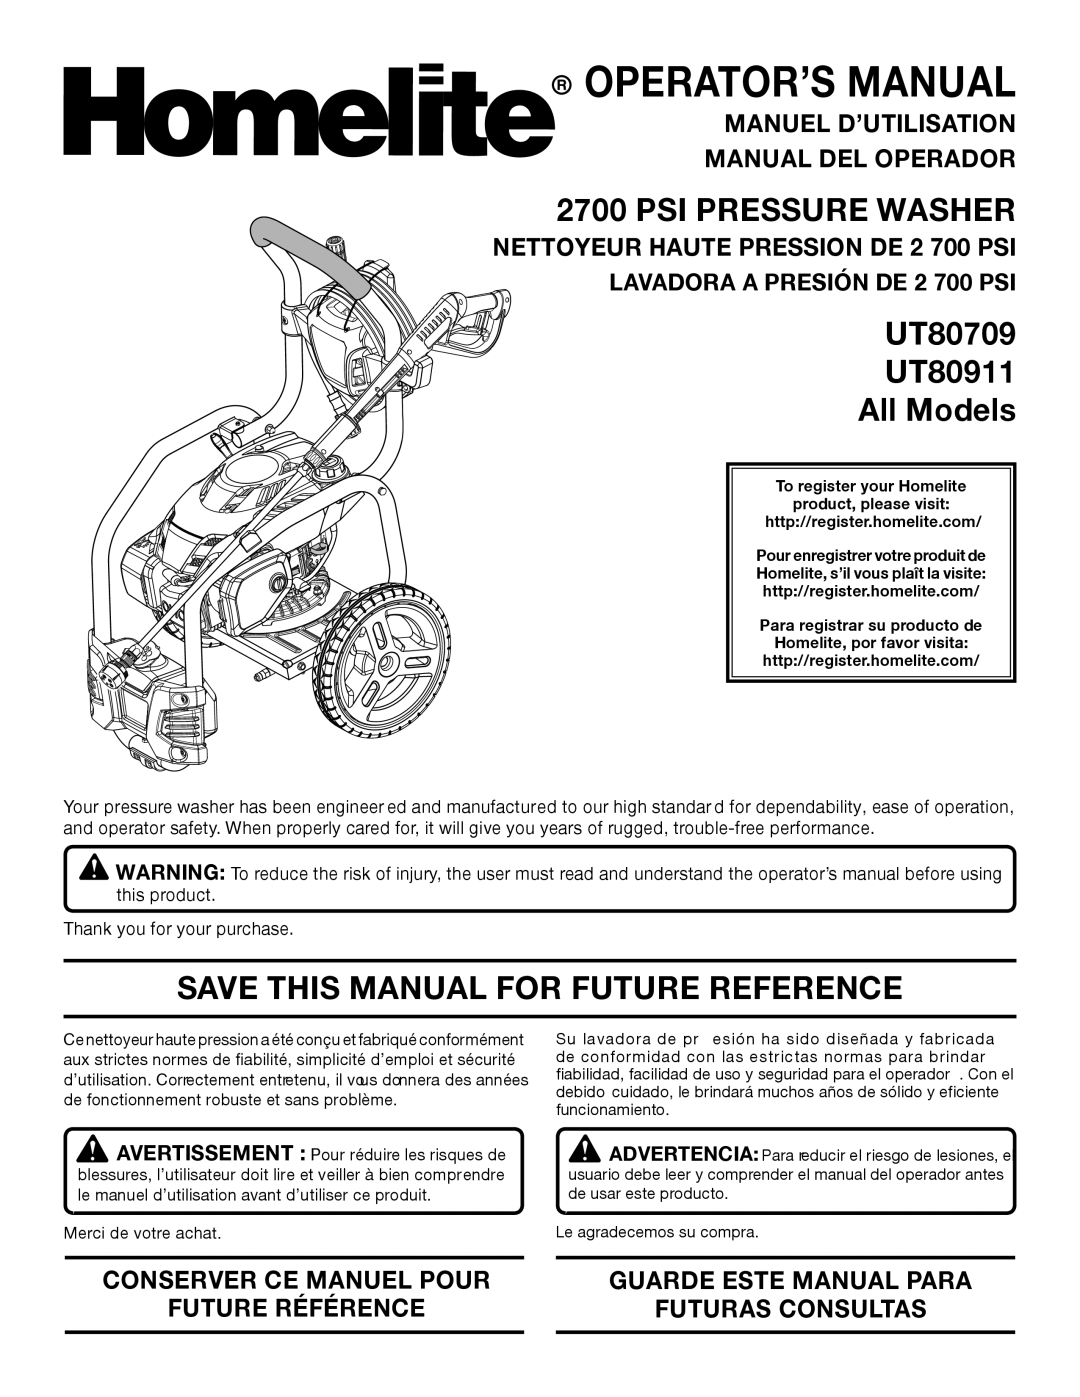 Homelite manuel dutilisation Psi Pressure Washer, UT80709 UT80911 All Models, Save This Manual For Future Reference 